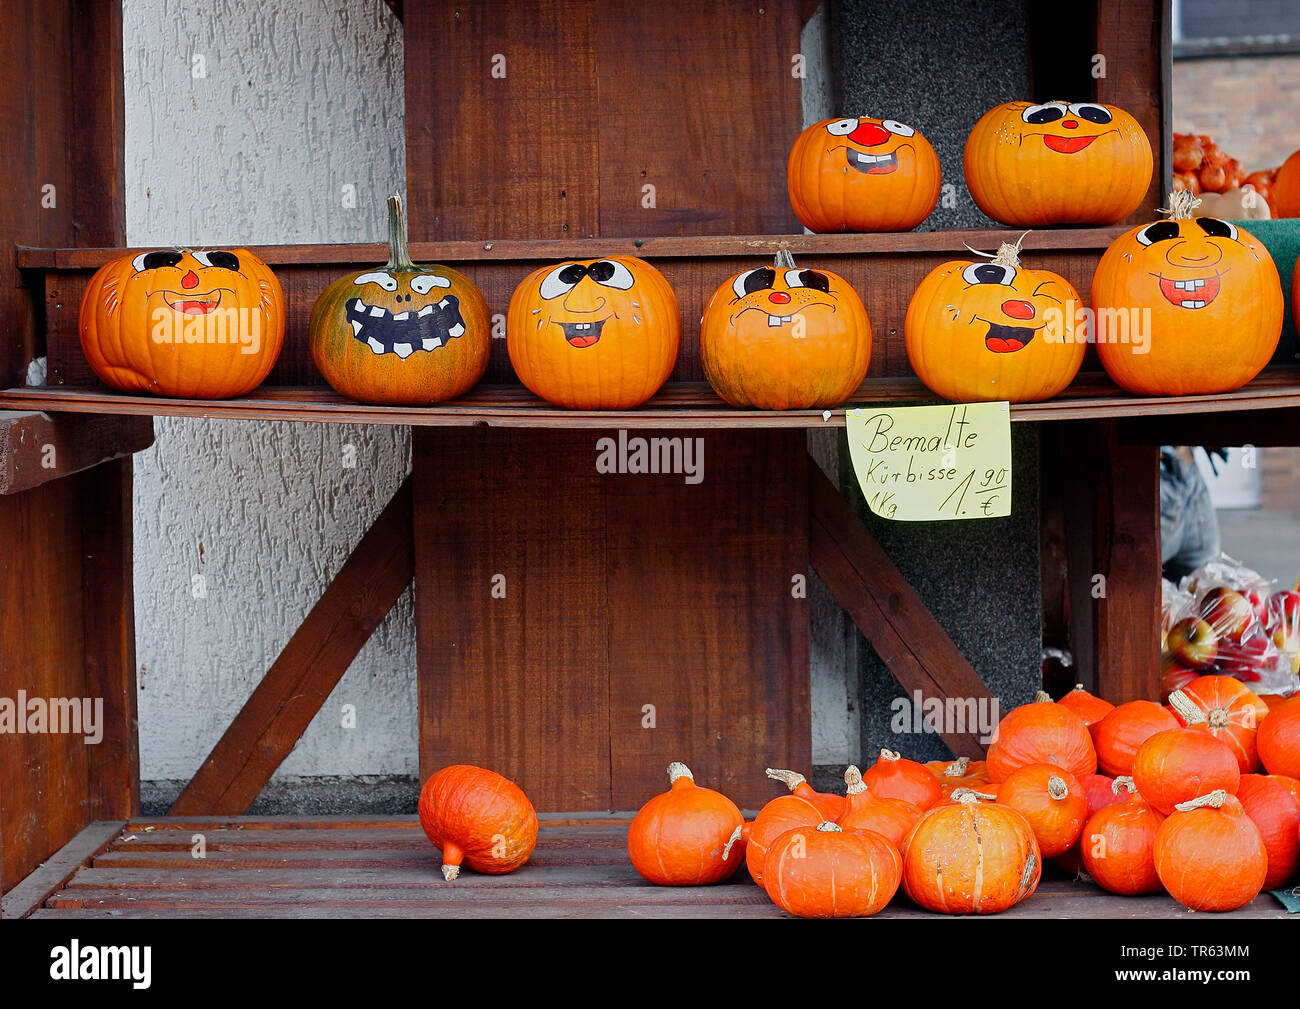 marrow, field pumpkin (Cucurbita pepo), painted faces on pumpkins Stock Photo